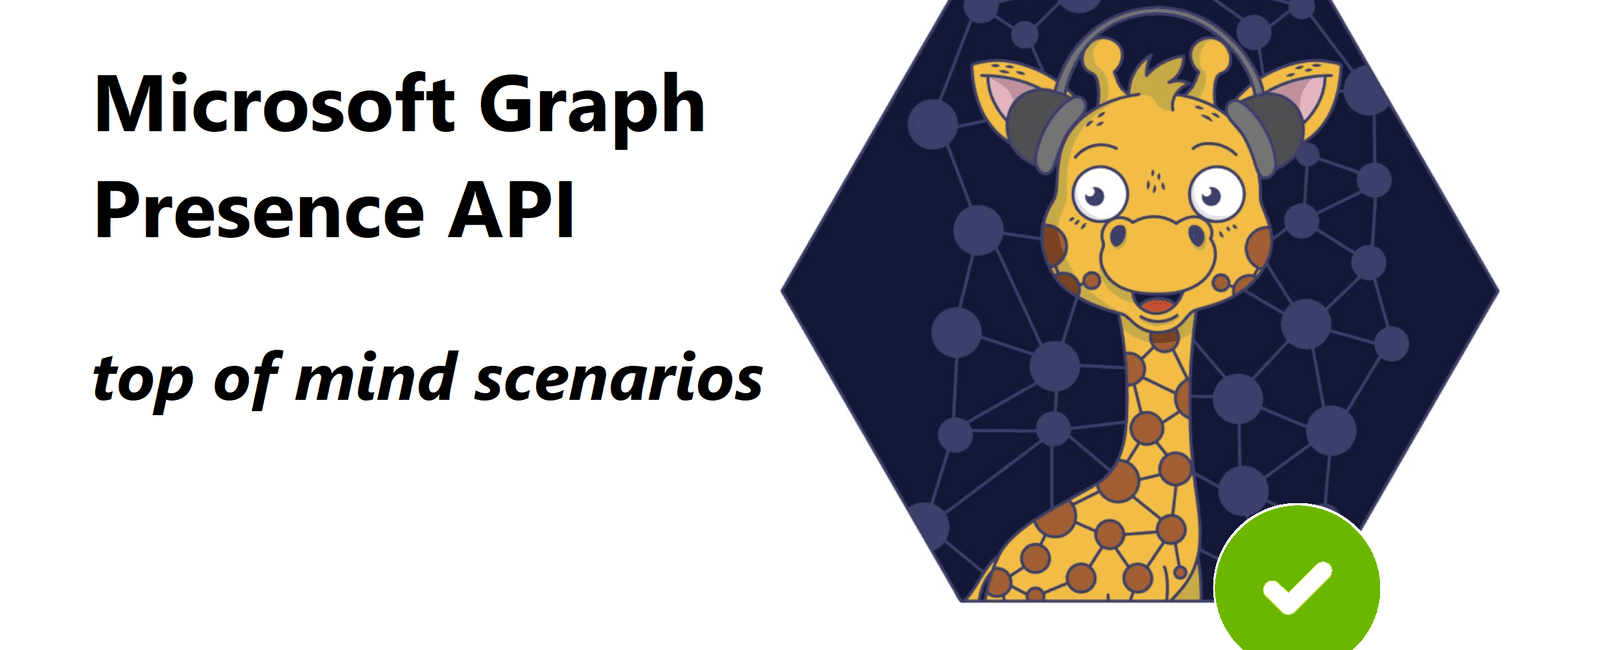 Microsoft Graph Presence API - top of mind scenarios